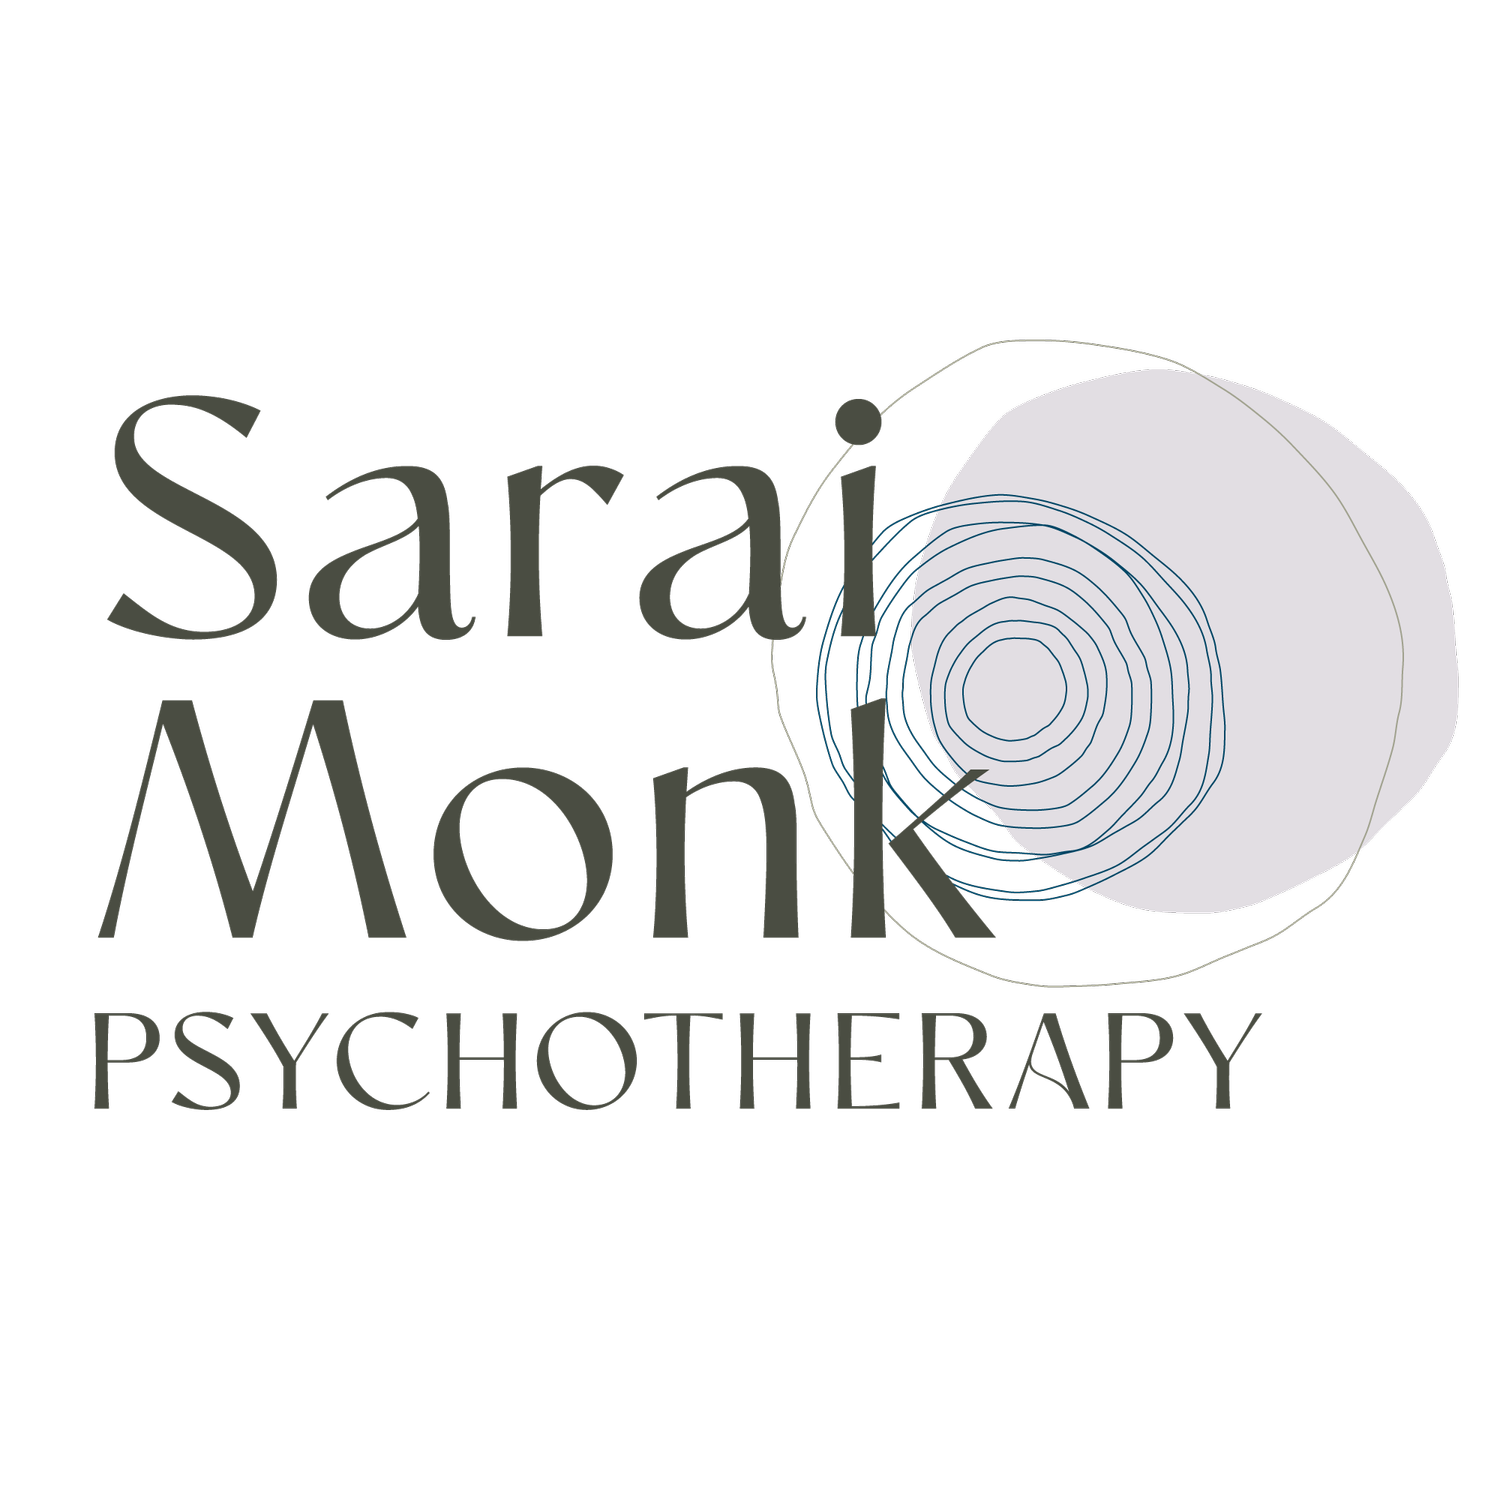 Sarai Monk Psychotherapy